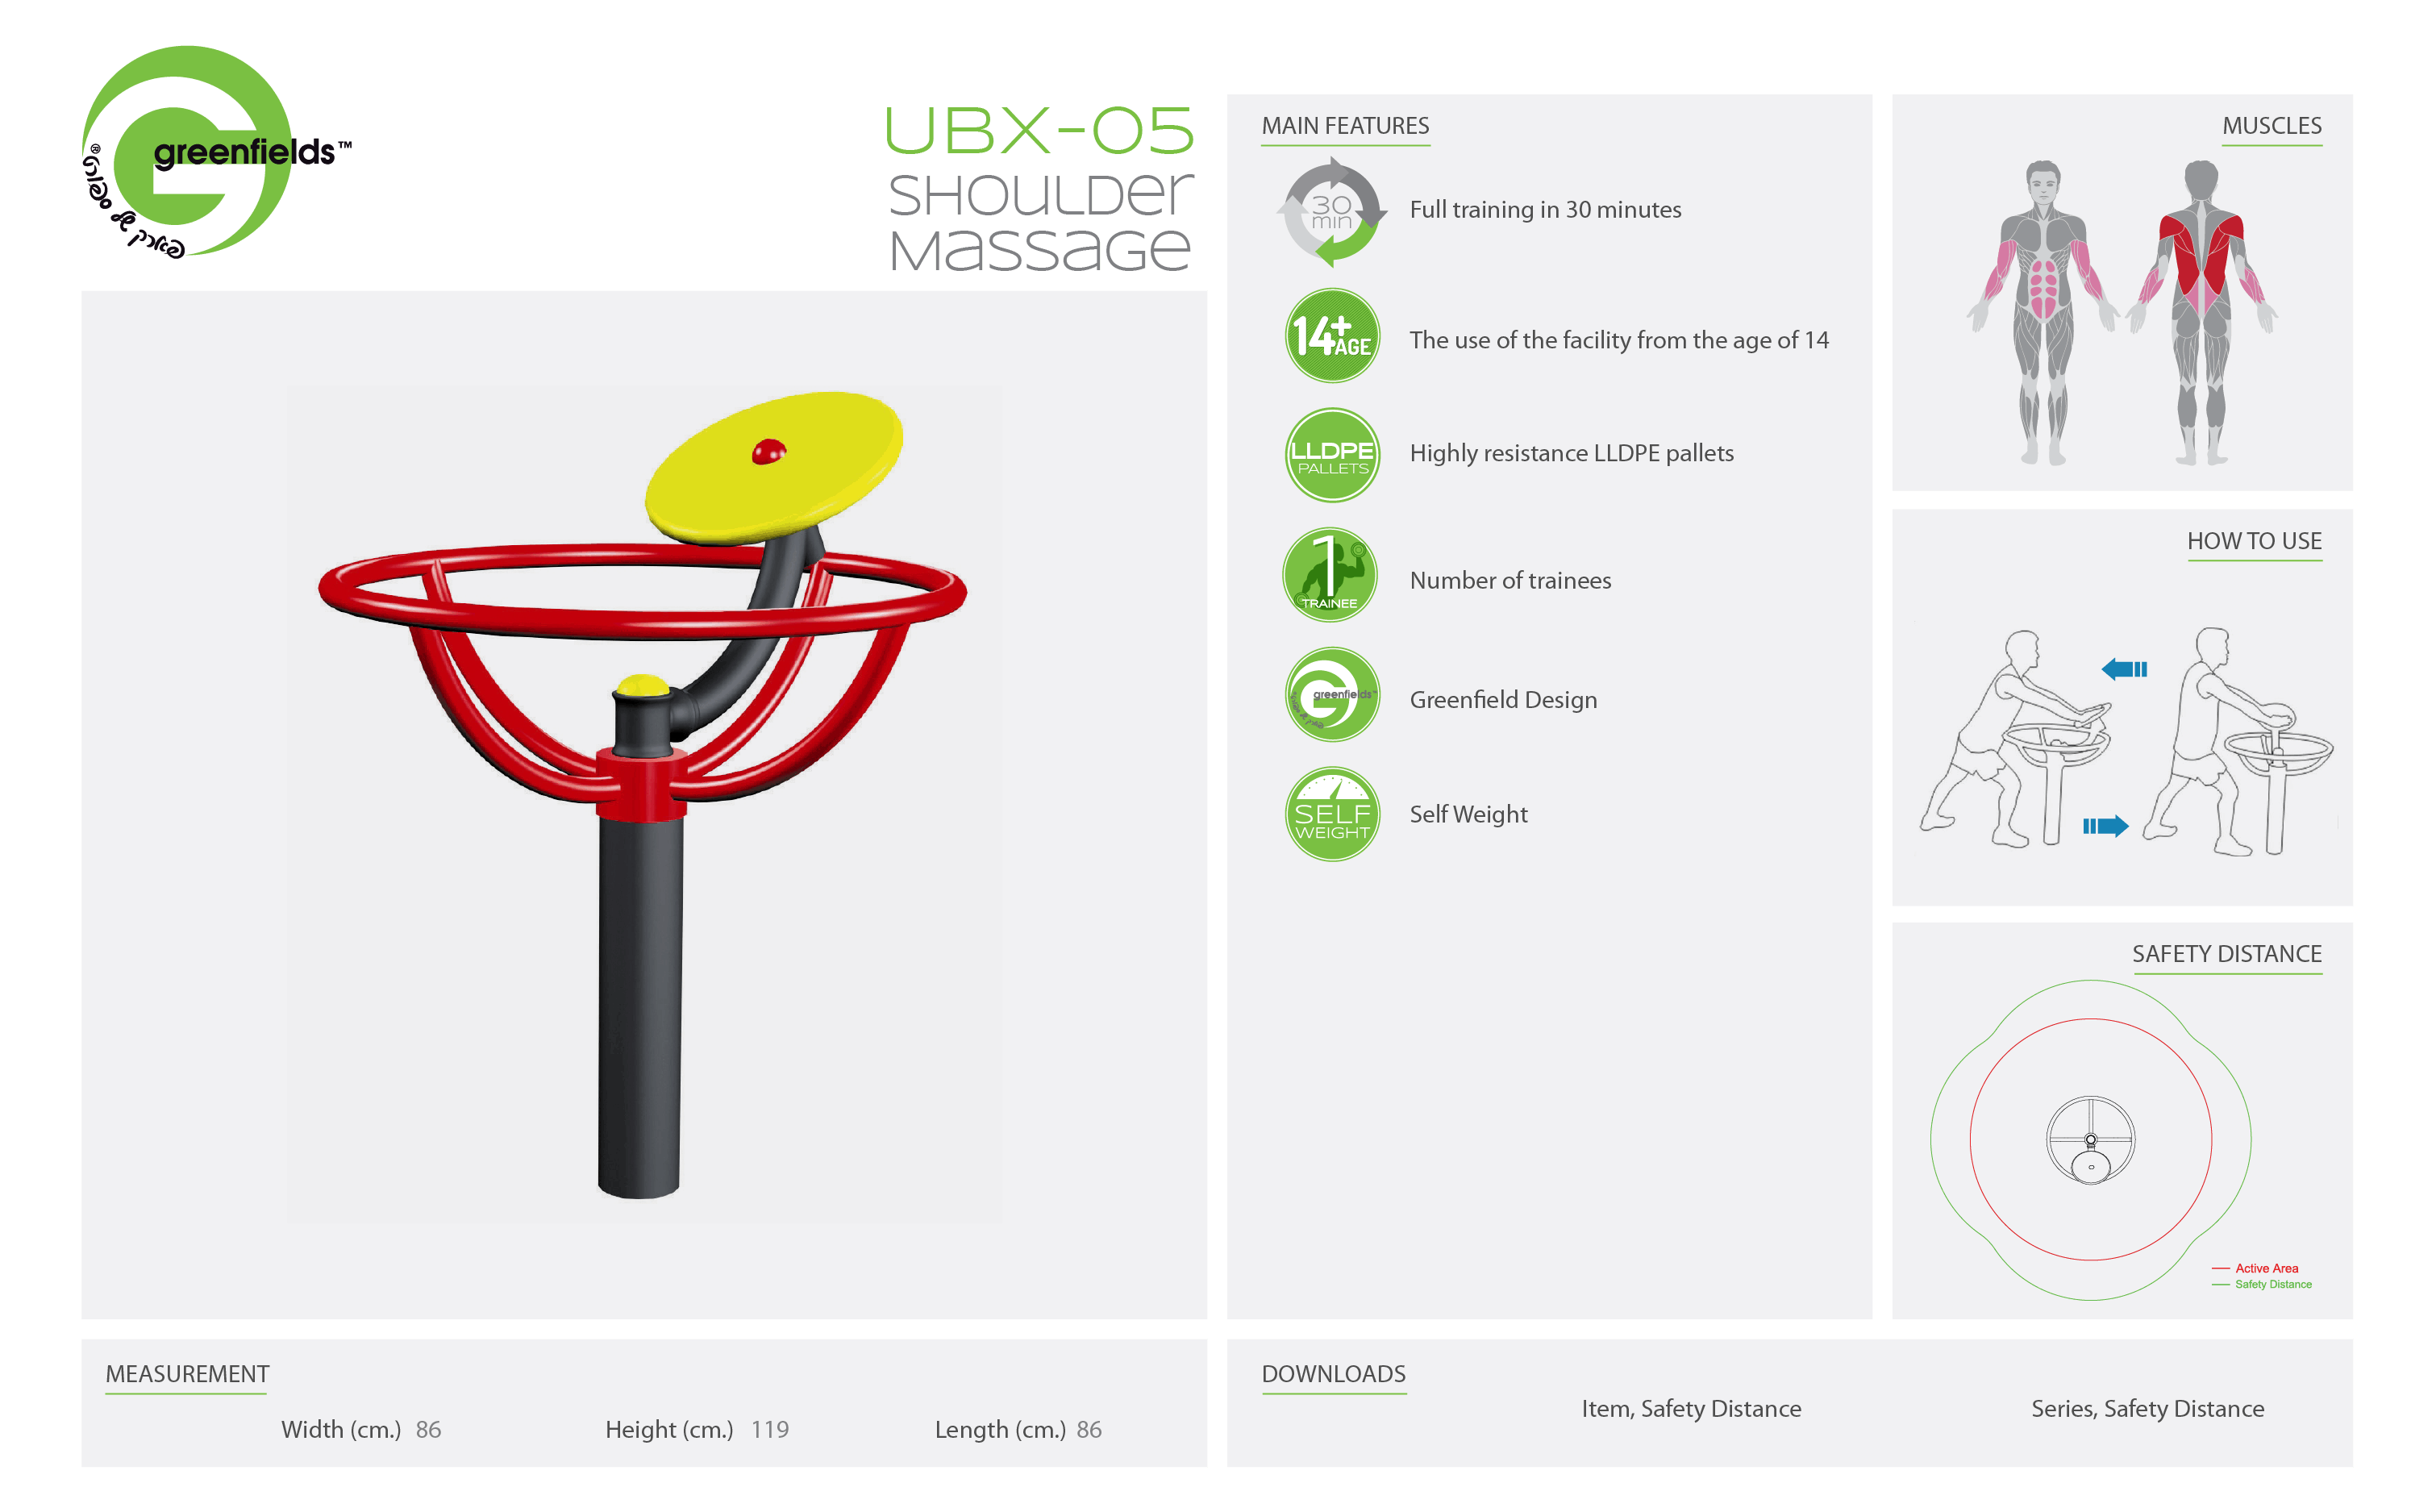 ubx-05 אורבניקס - מתקן כושר